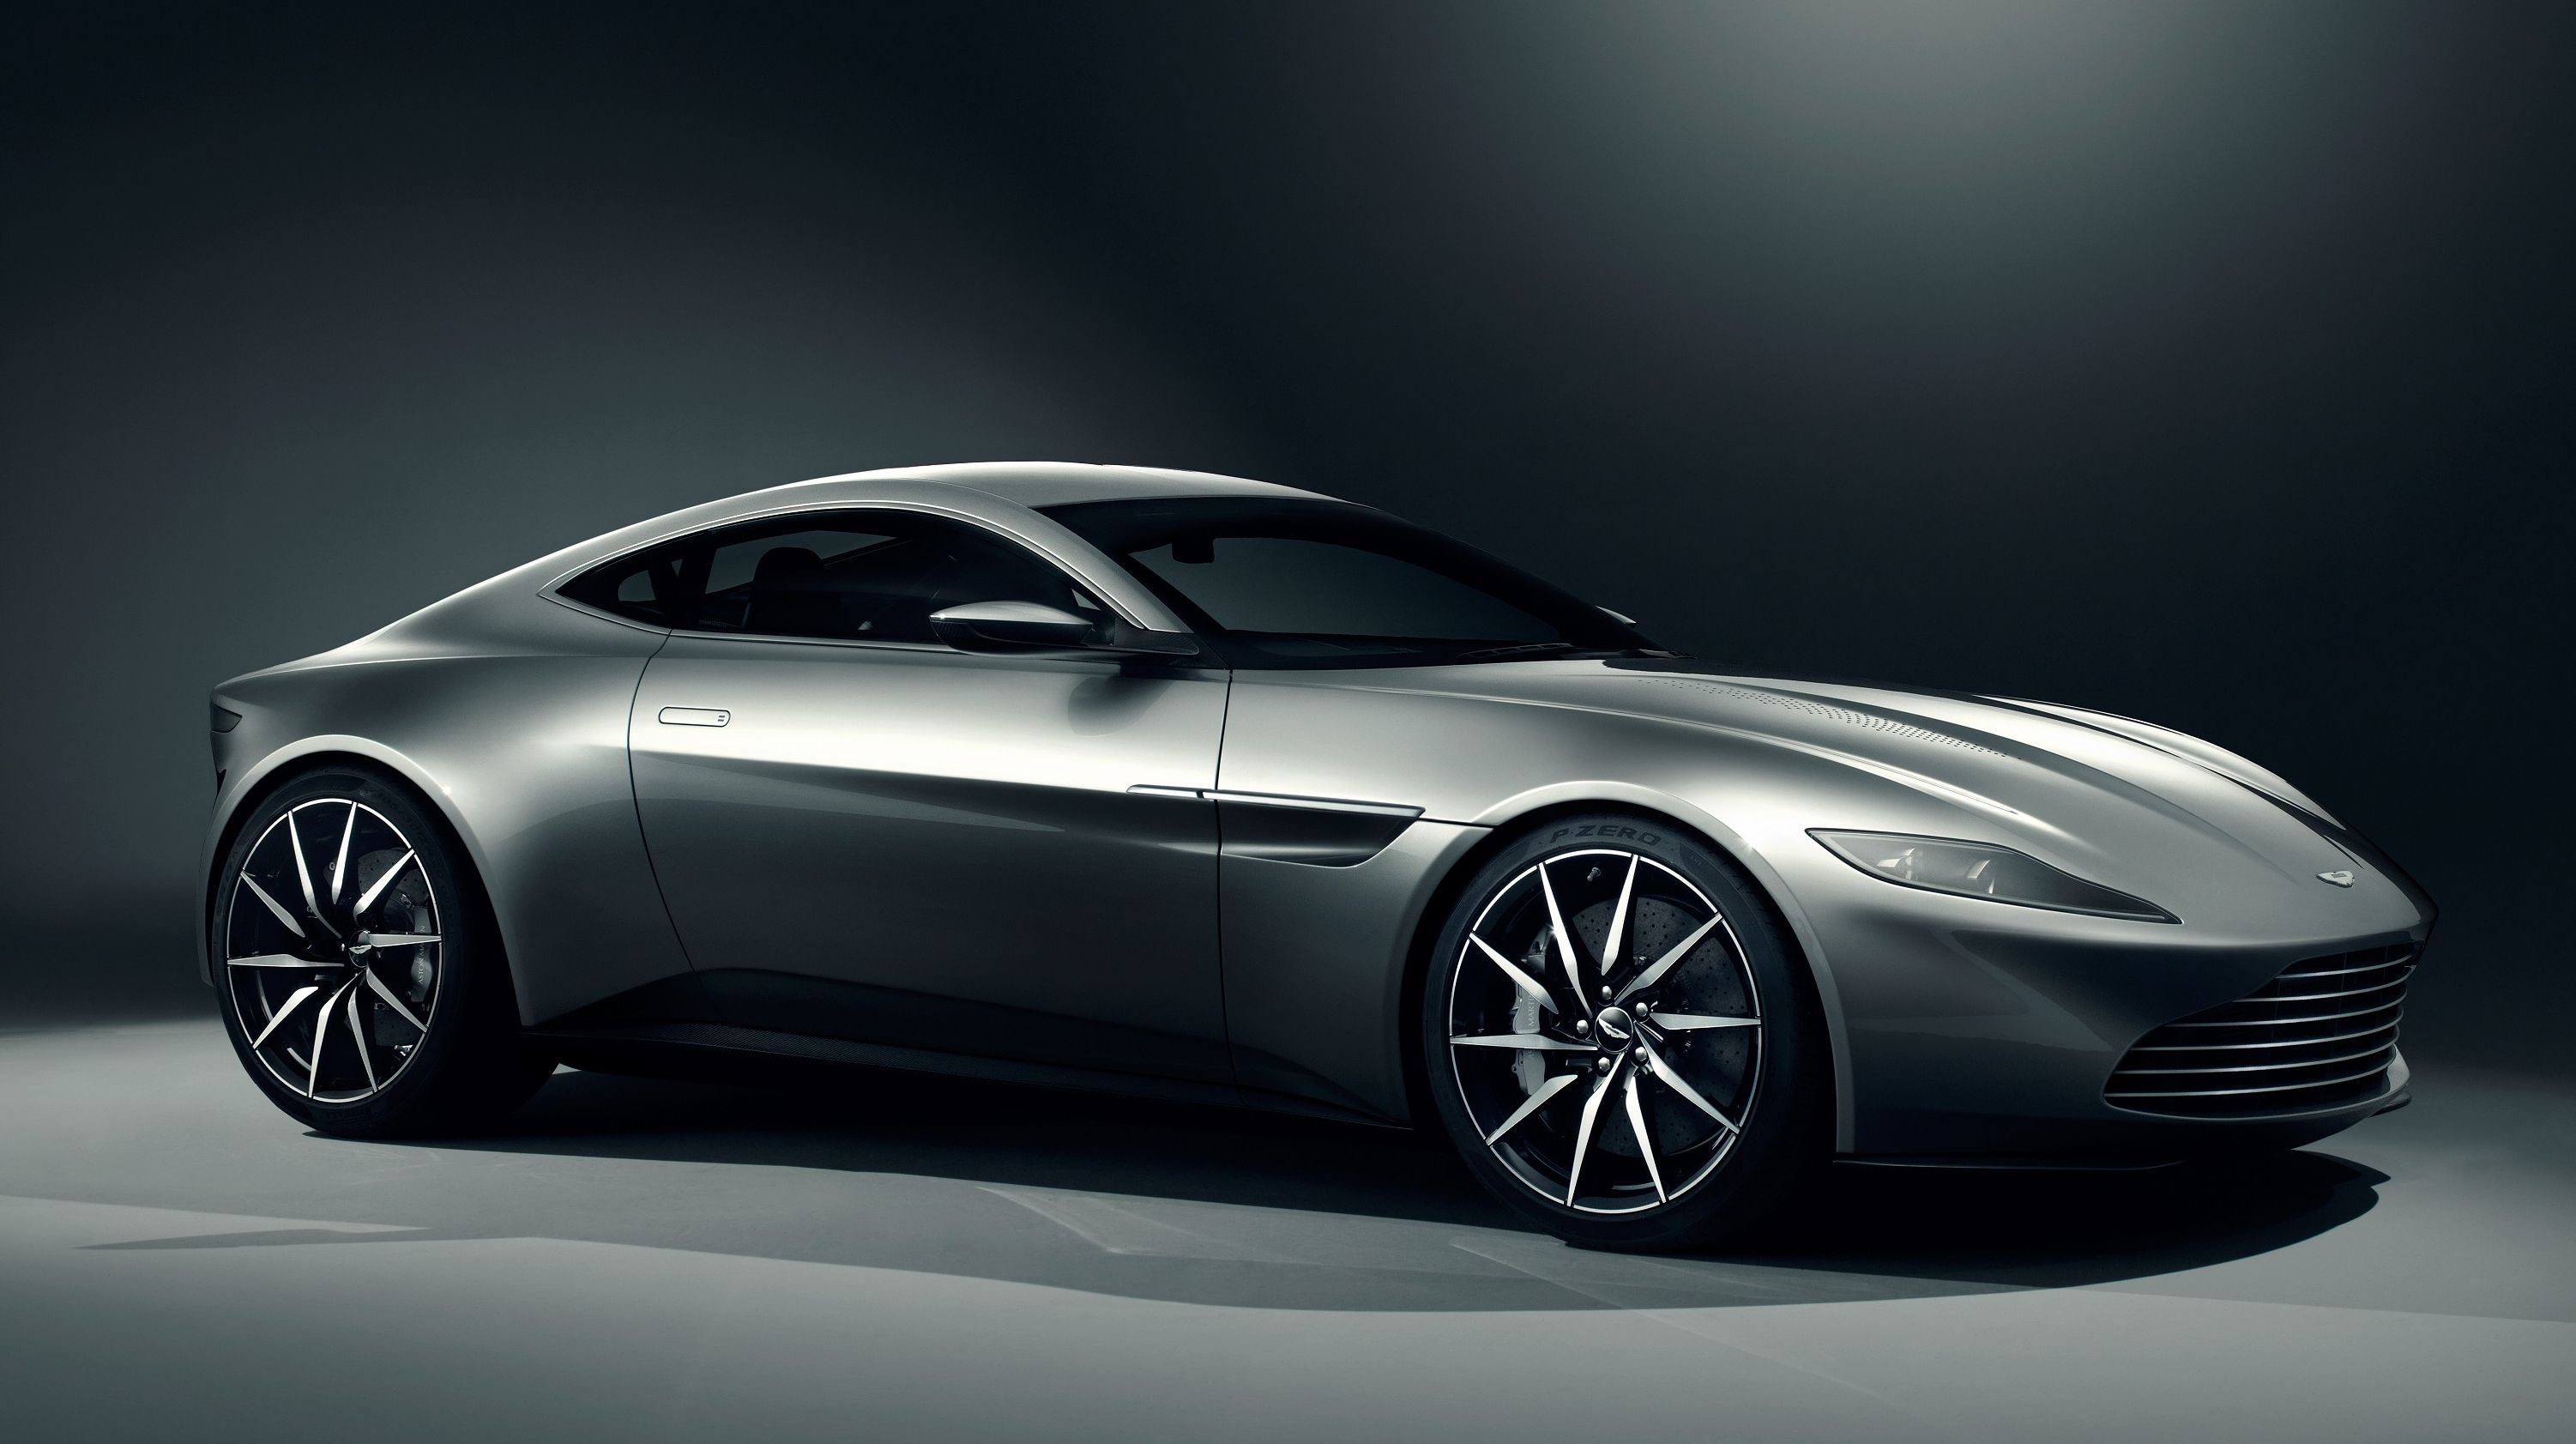 2015 The Aston Martin DB10 is Not a Glimpse into Aston's Future